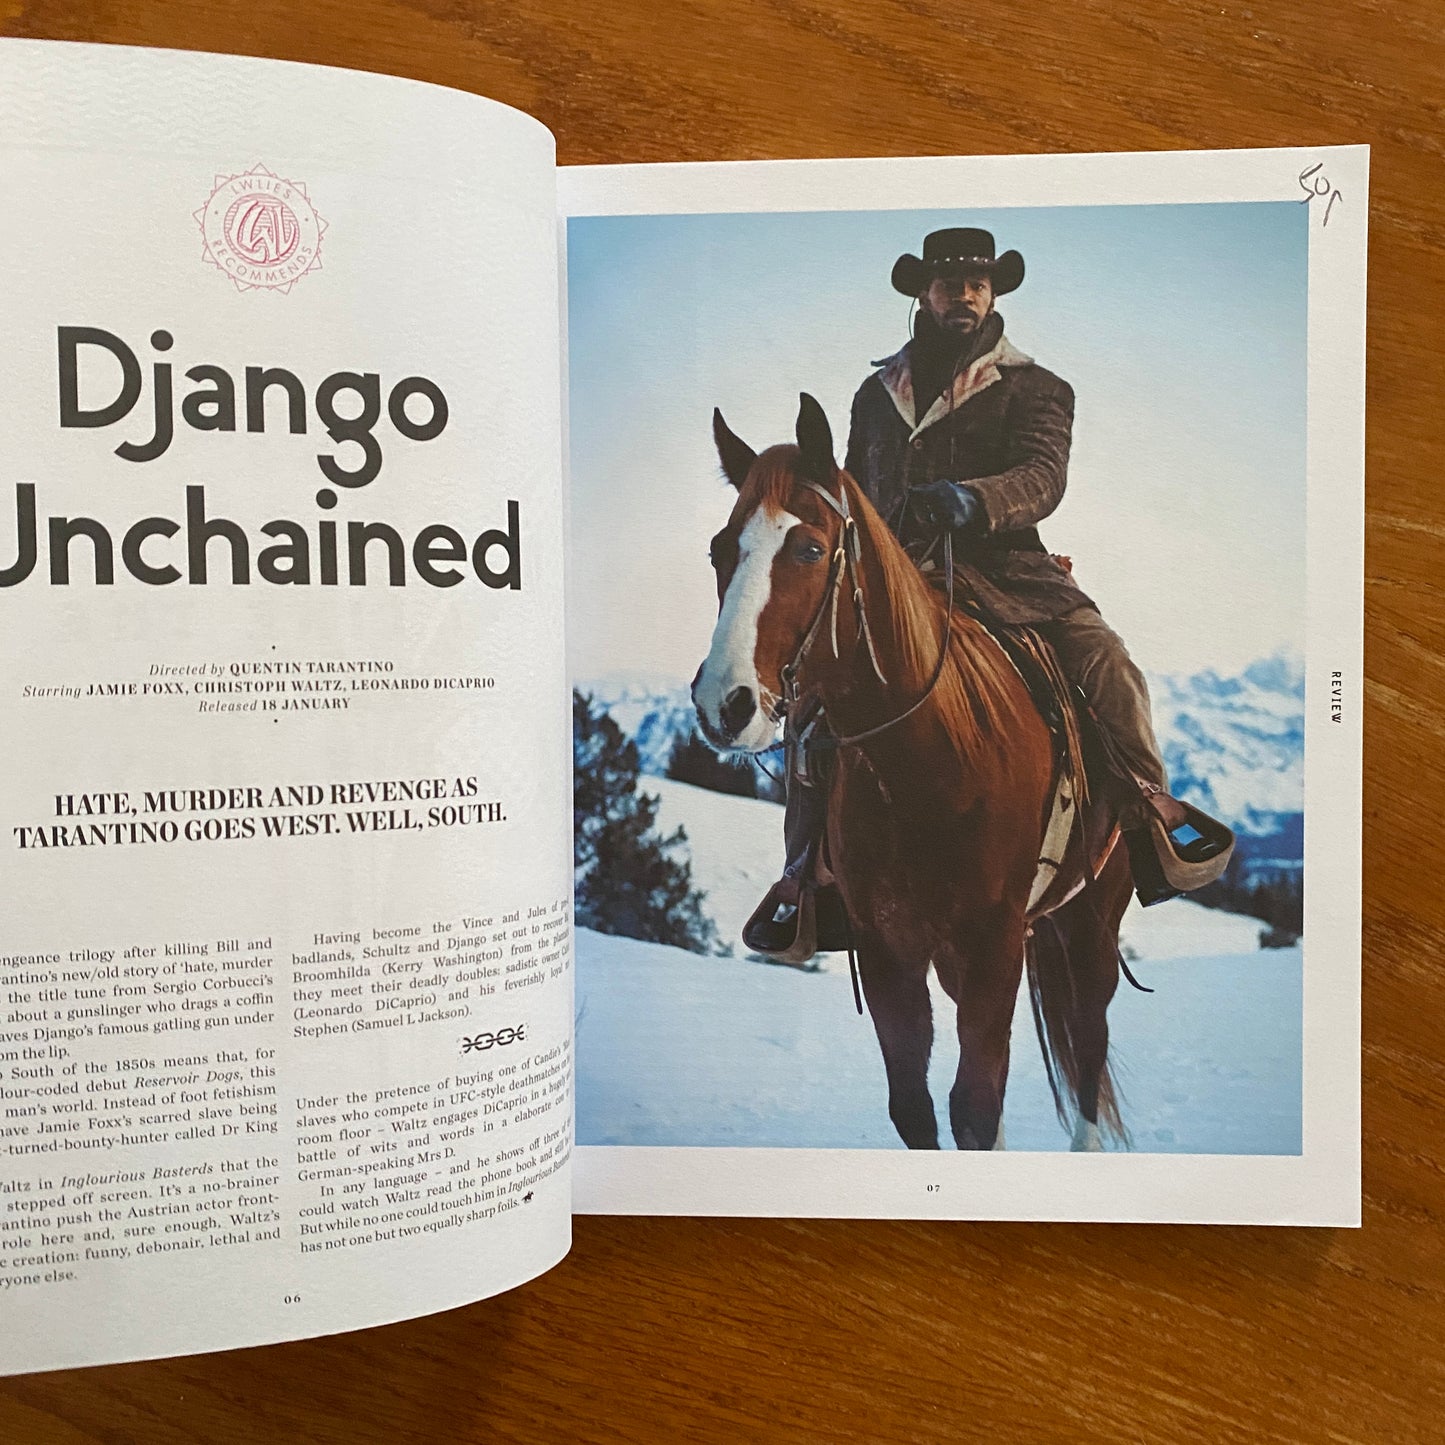 Issue 45 - Django Unchained